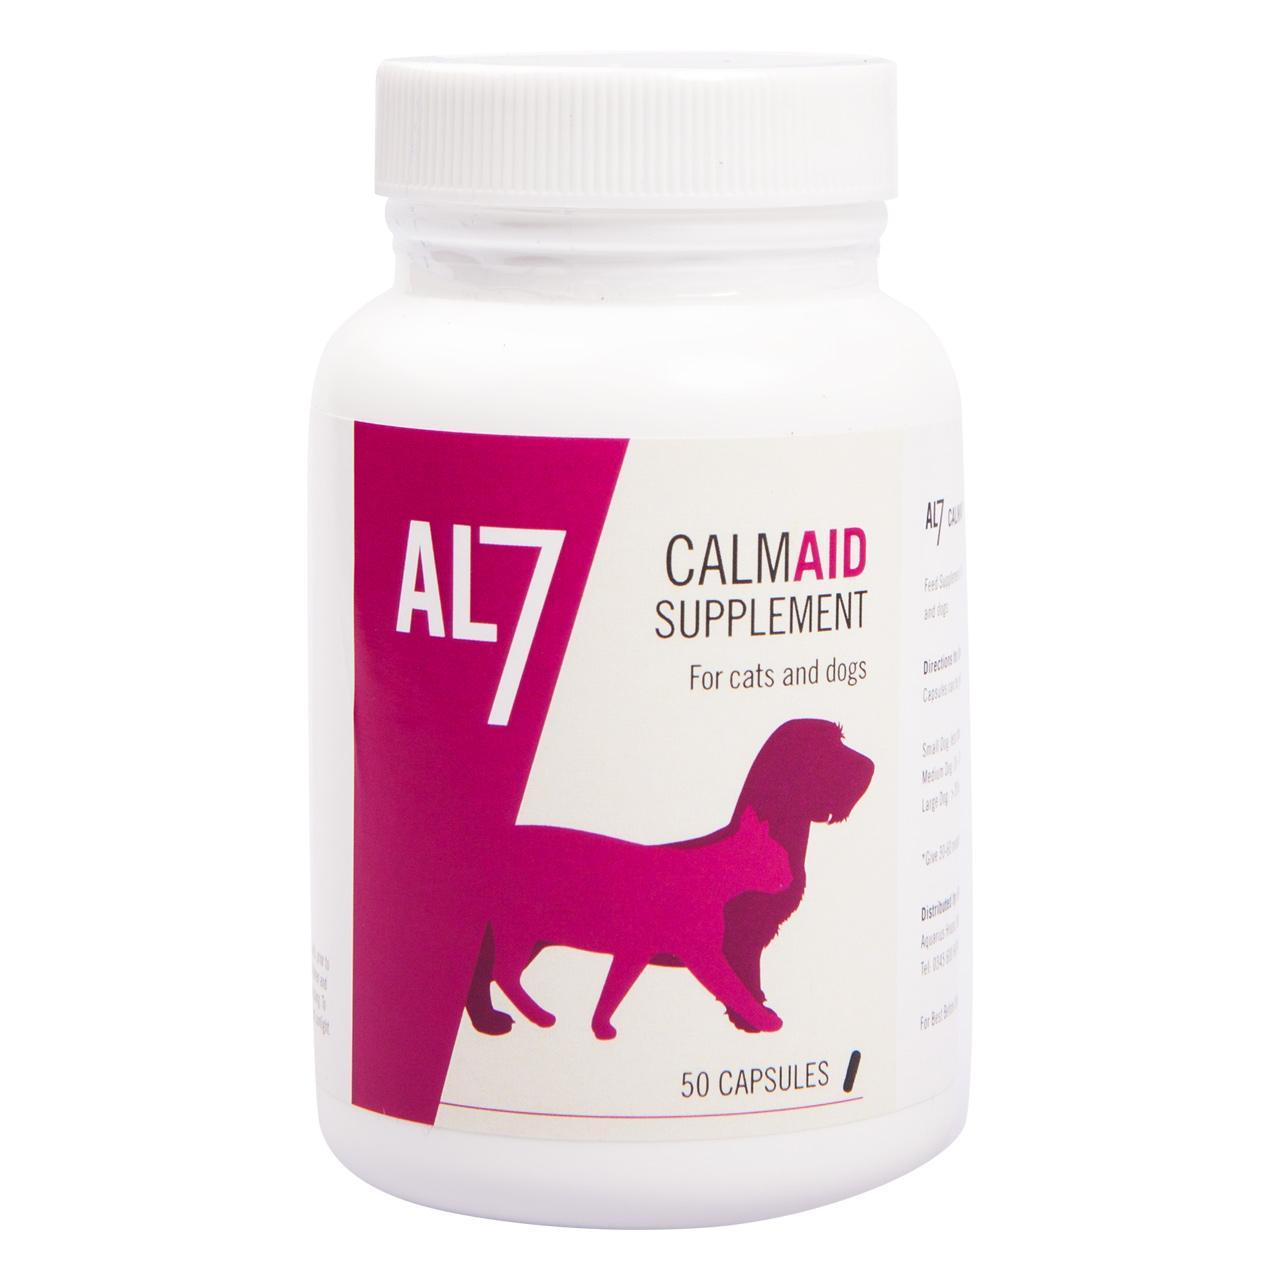 An image of AL7 CalmAid Supplement